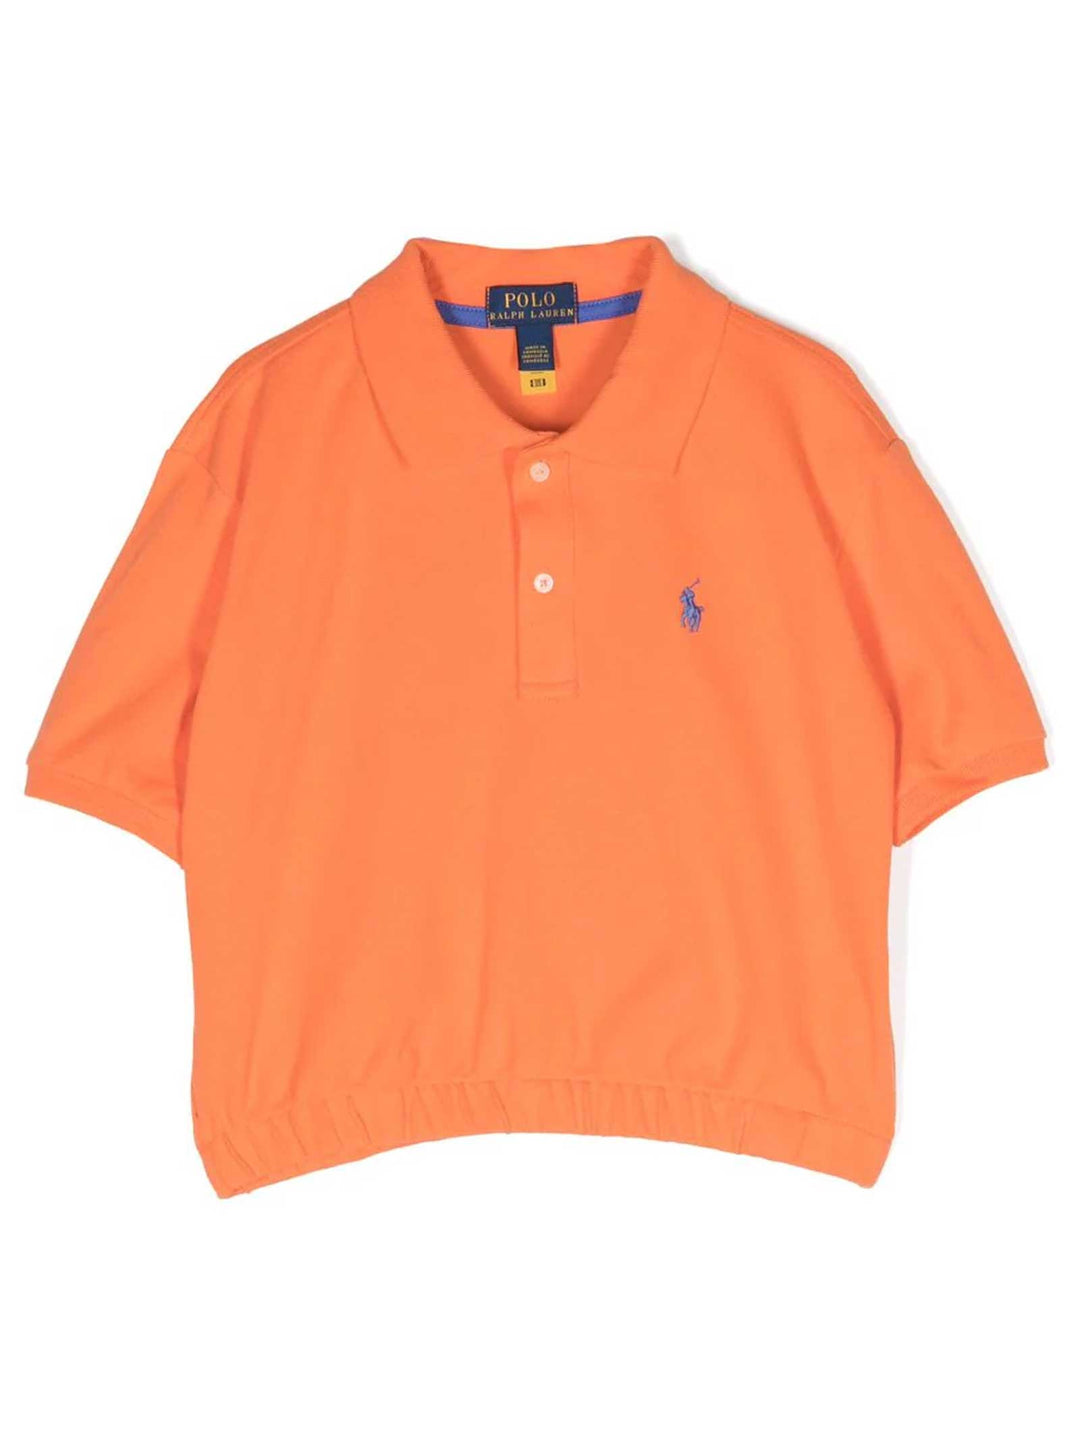 Polo fille orange avec logo